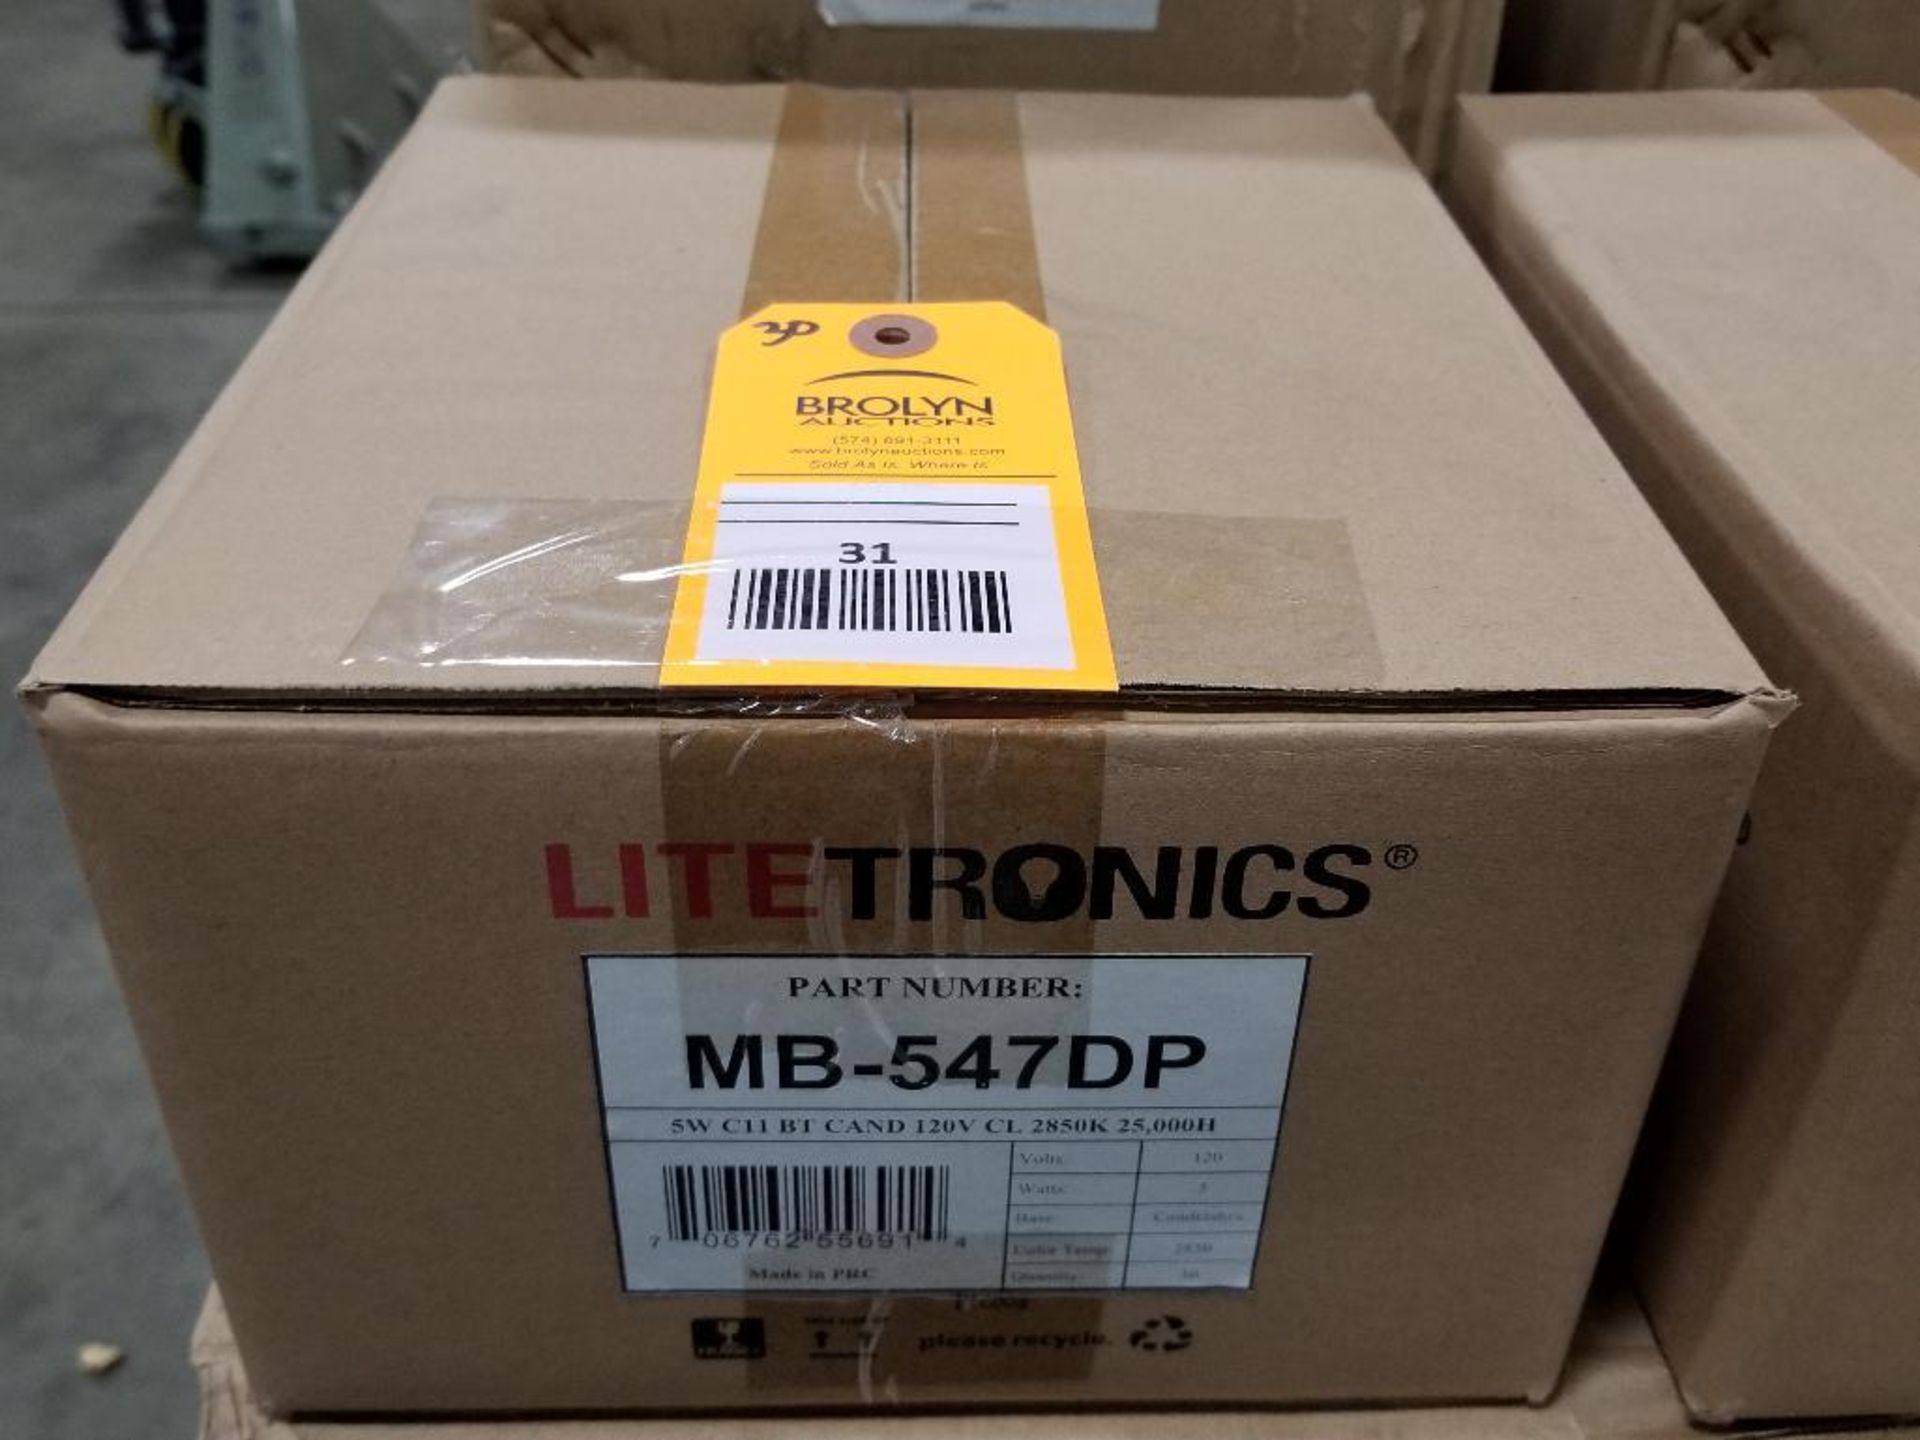 Qty 30 - Litetronics bulb. Part number MB-547DP. New in bulk box.